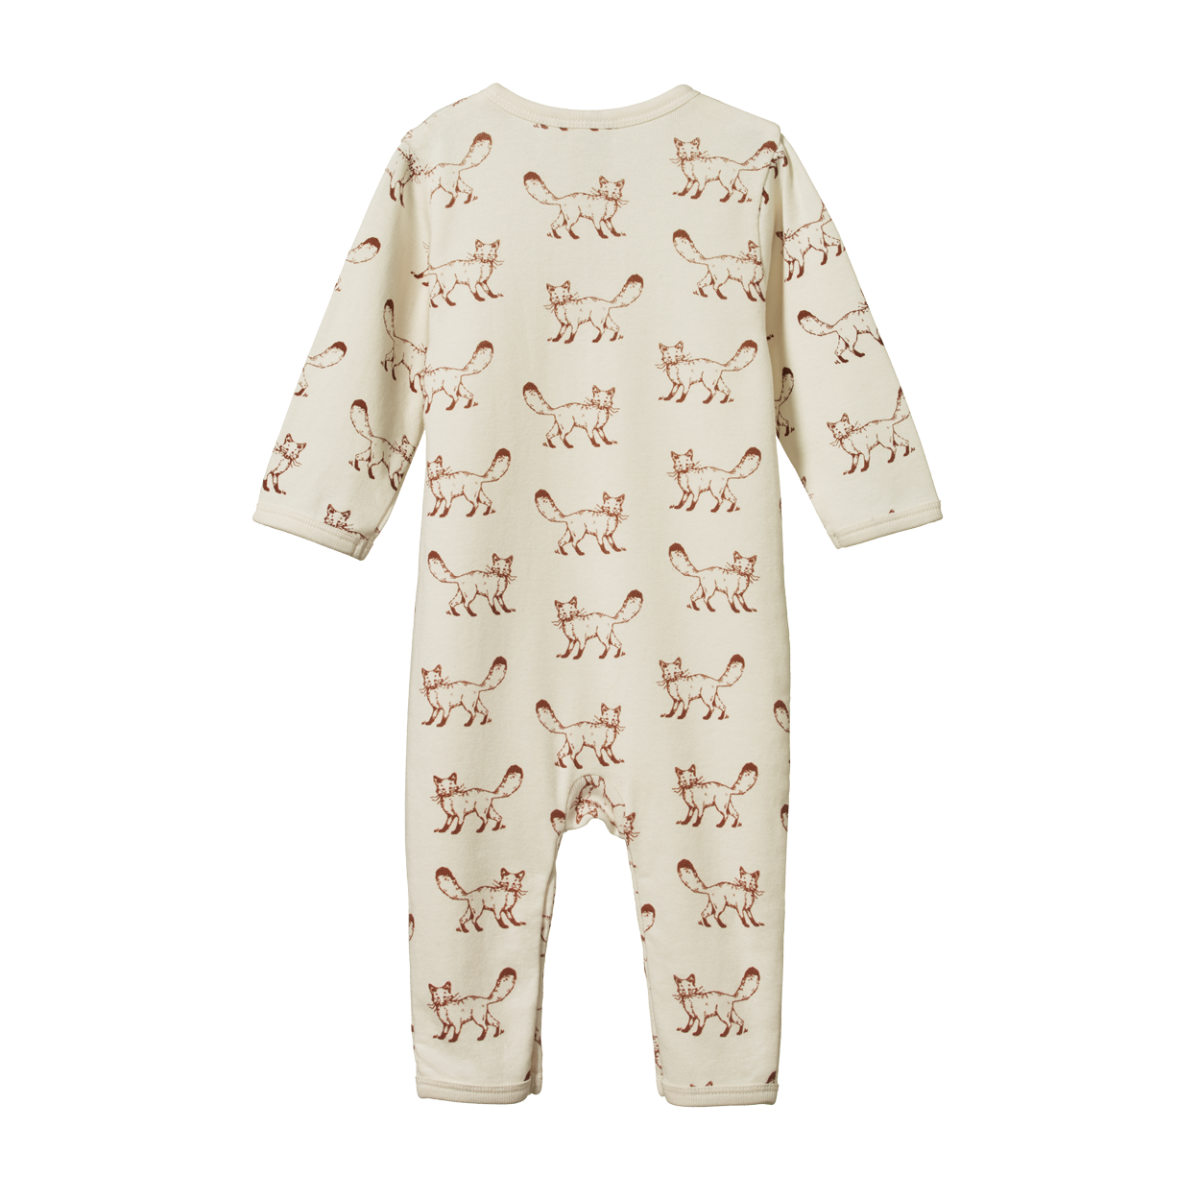 Nature Baby Organic Cotton Henley Pyjama Suit Fox Print.